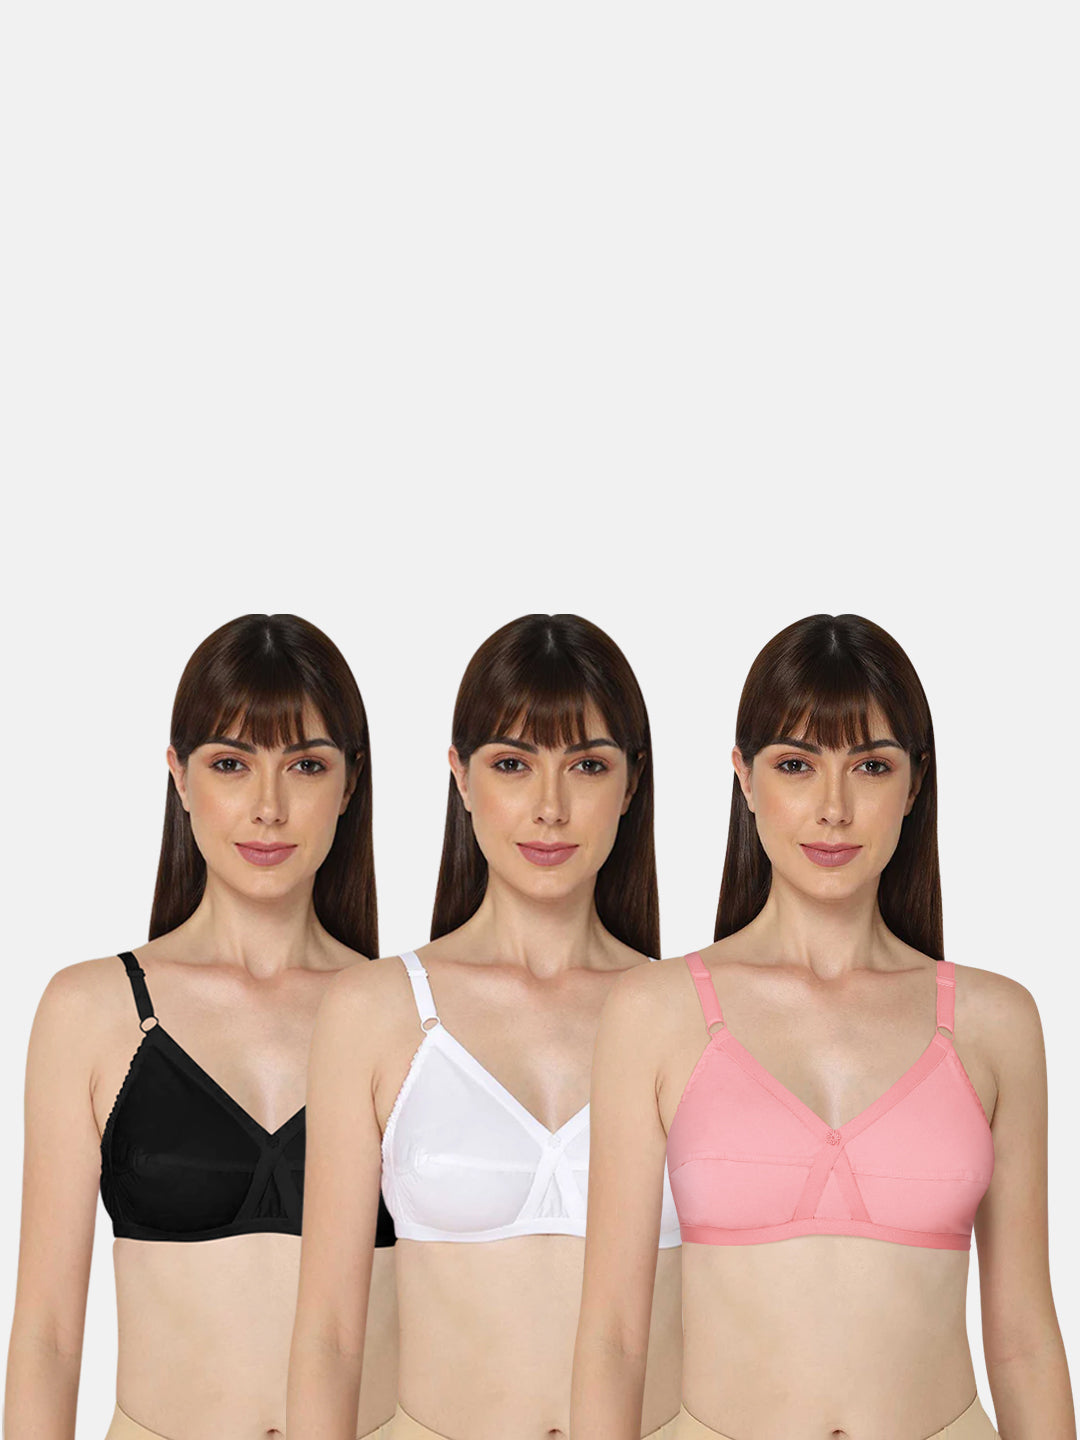 36 D Bras for Women - Buy 36 D Size Bra Online in India